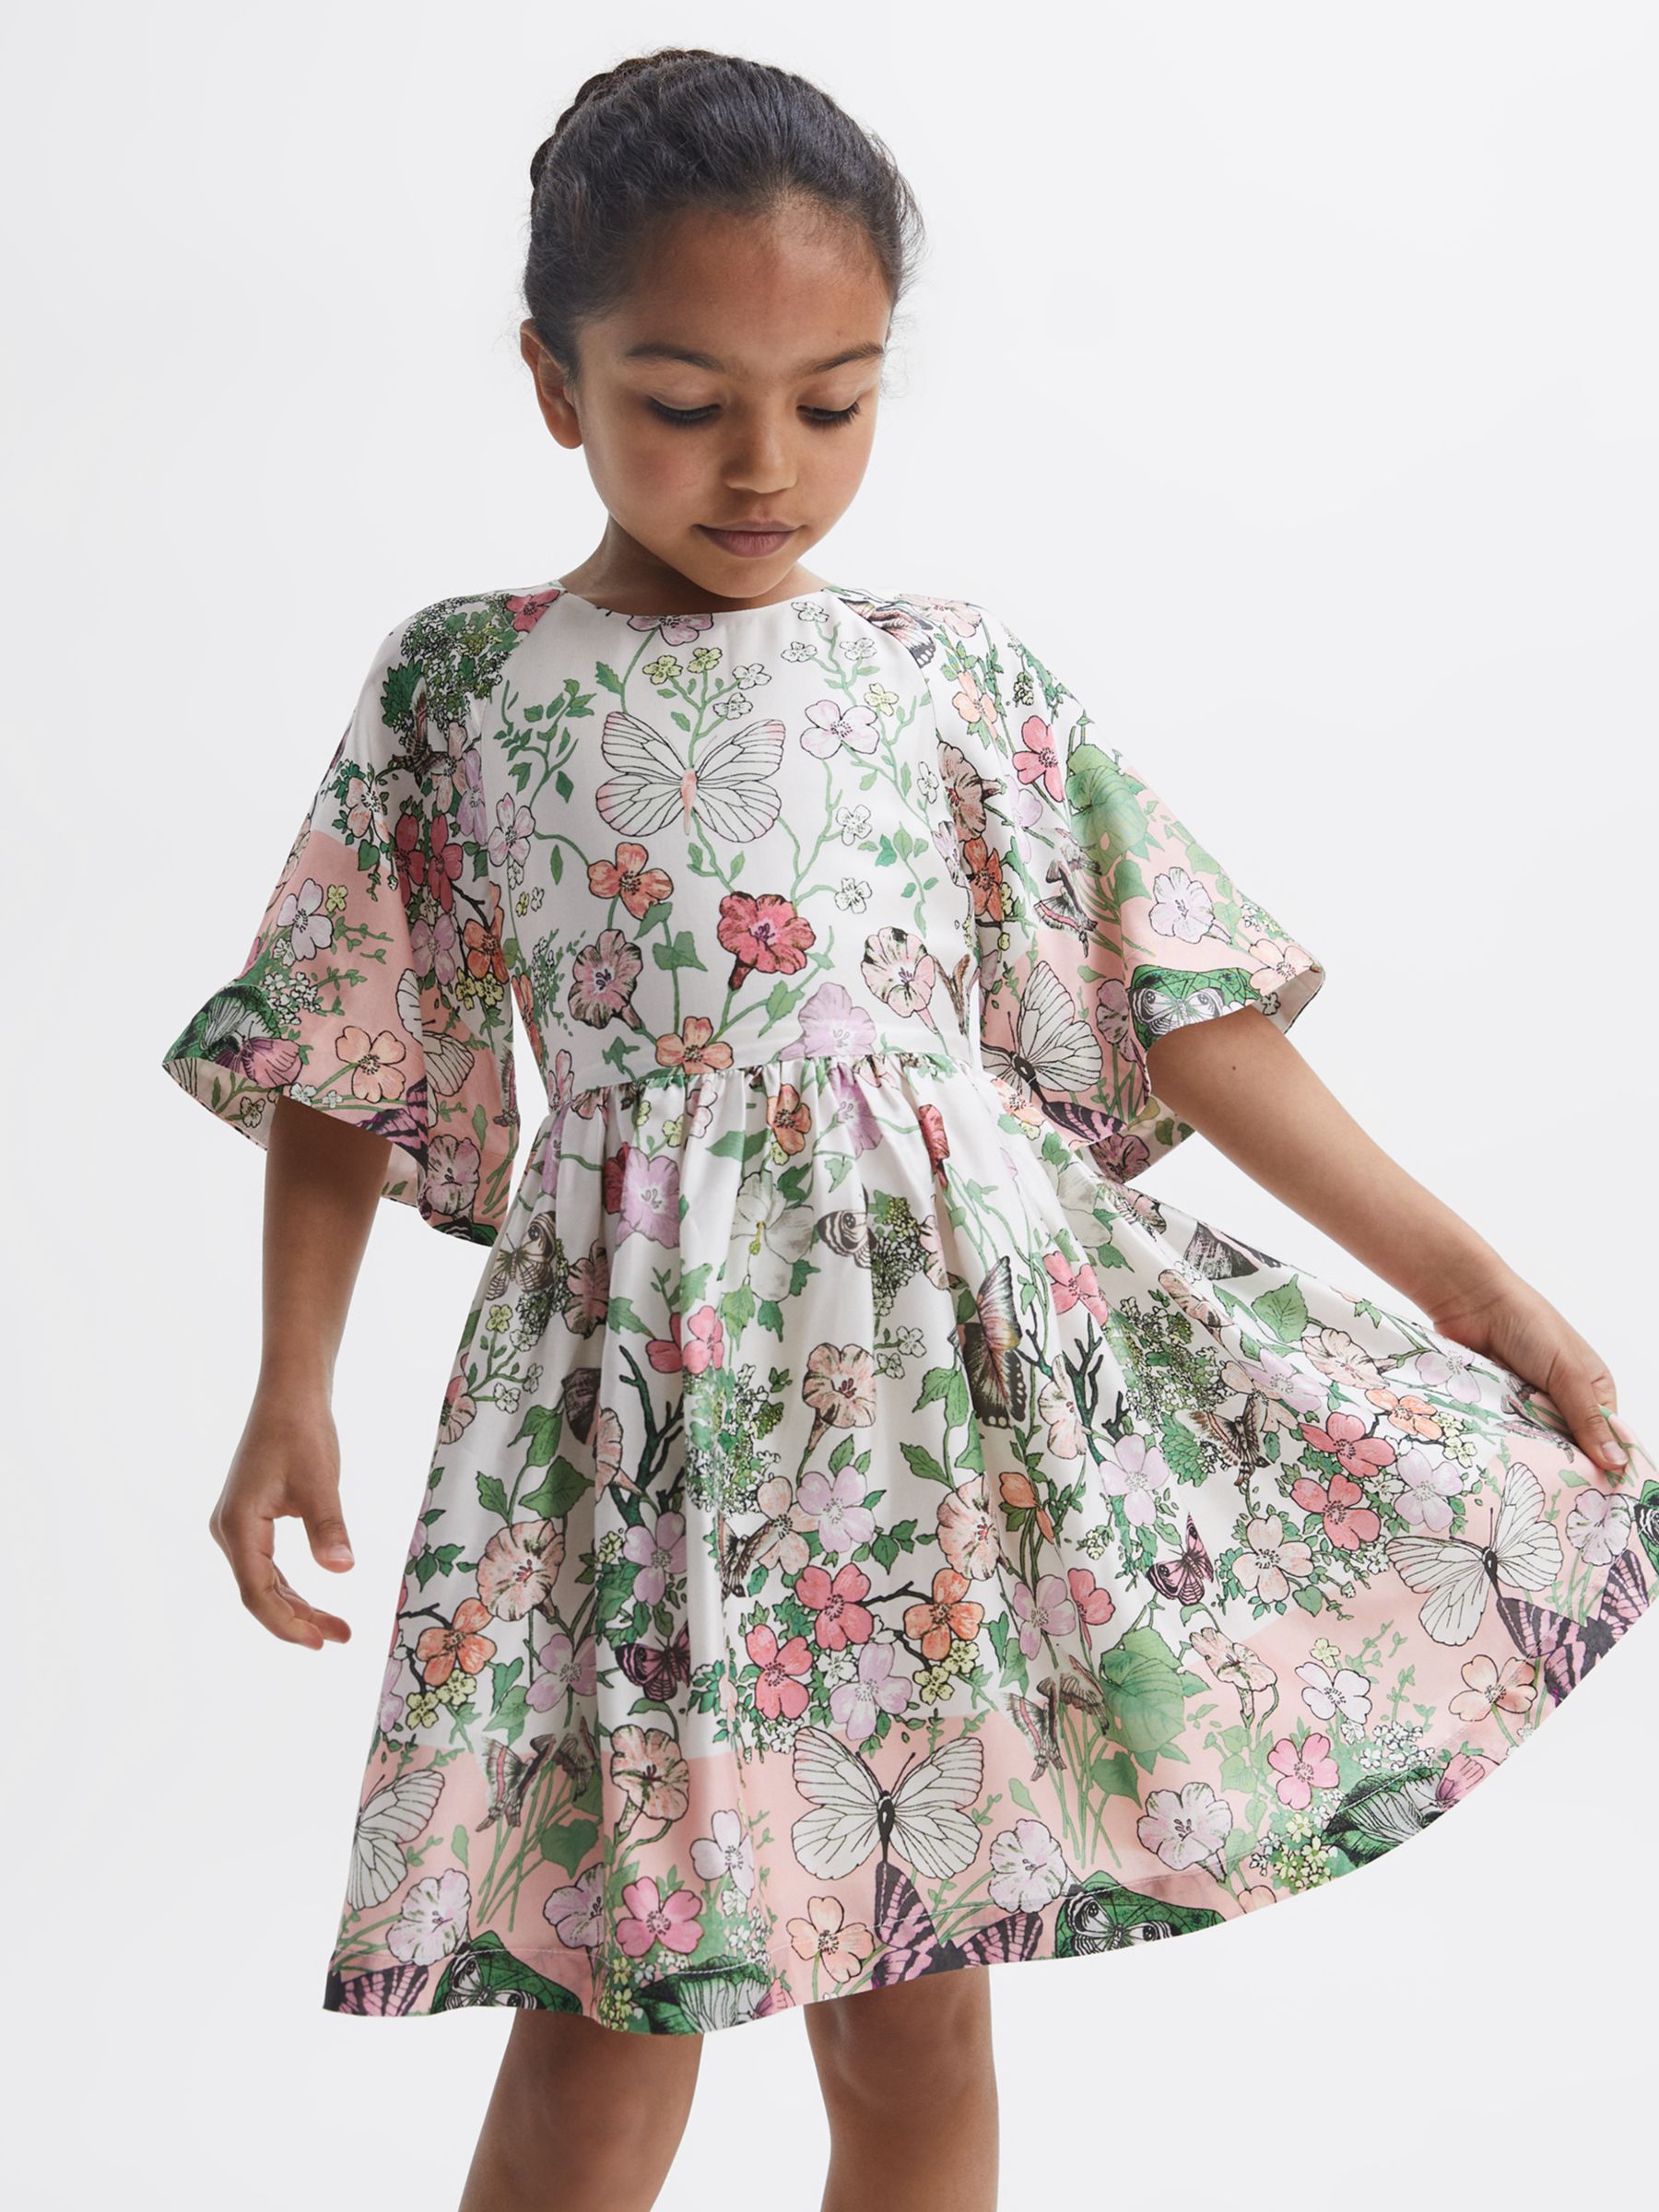 Reiss Kids' Marnie Printed Floaty Dress, Ivory at John Lewis & Partners